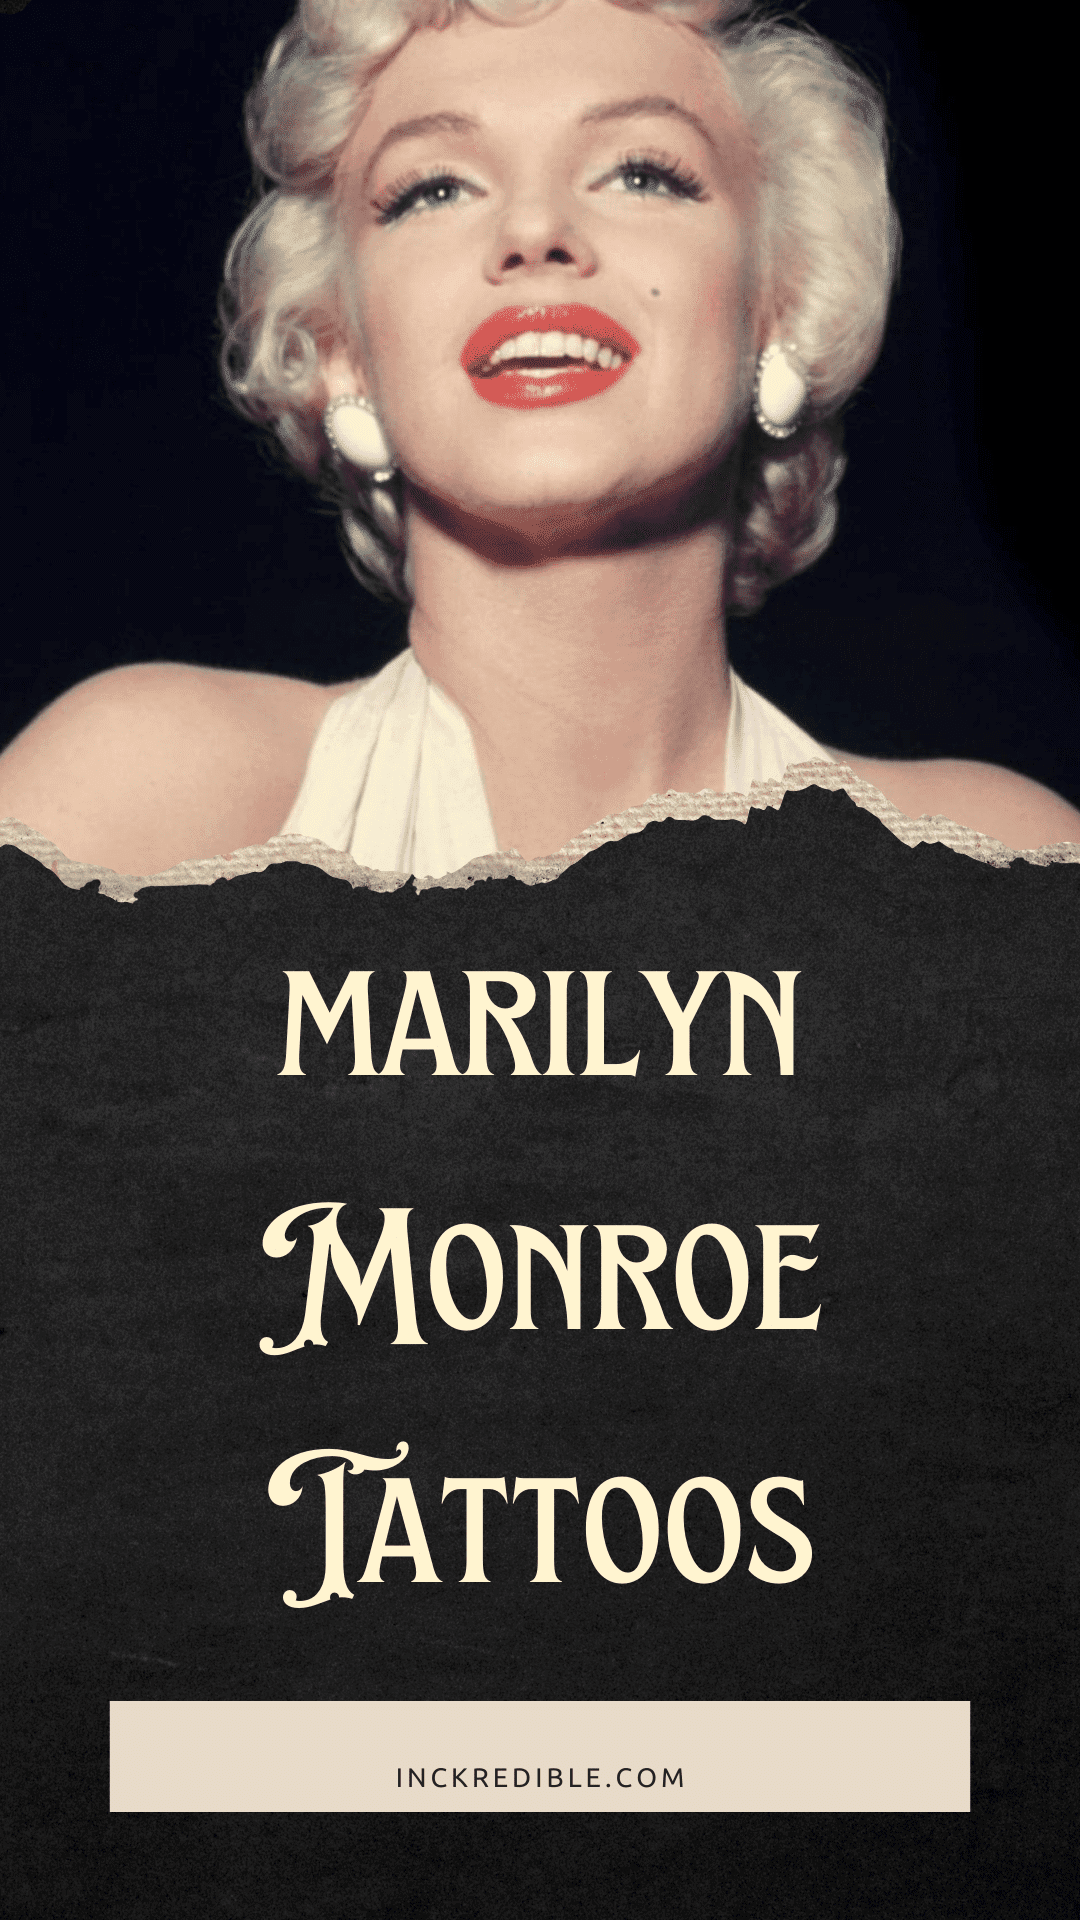 Marilyn Monroe Tattoo Ideas - TattooTab